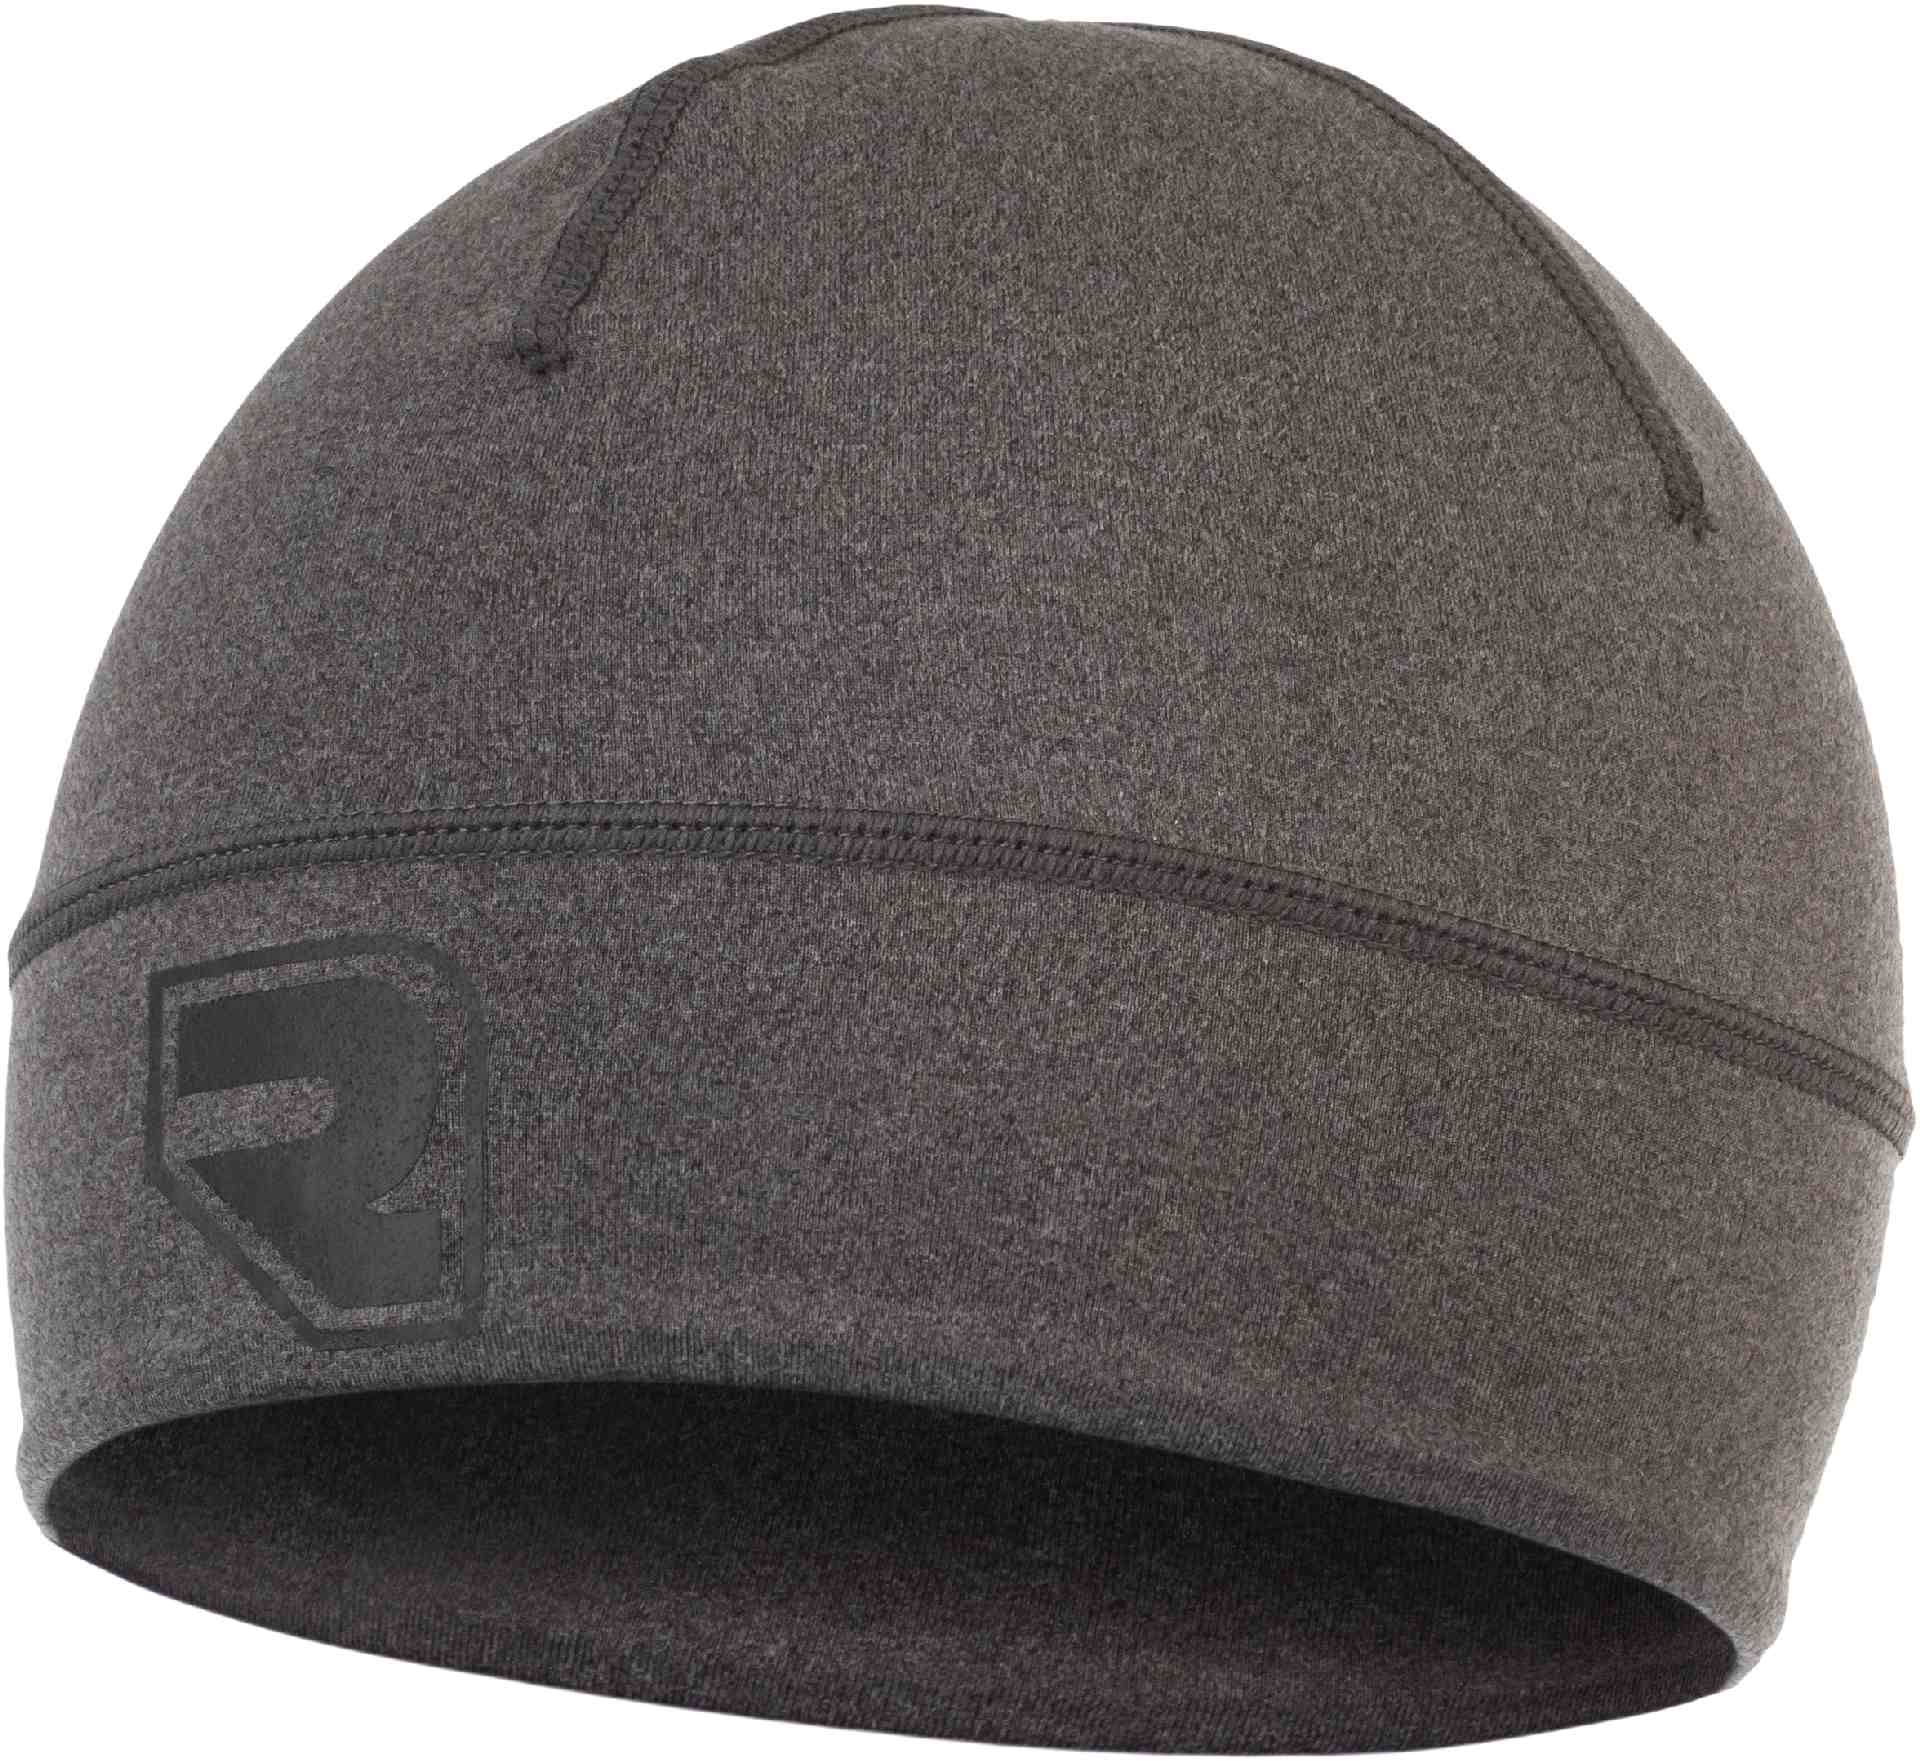 Unisex winter sports hat